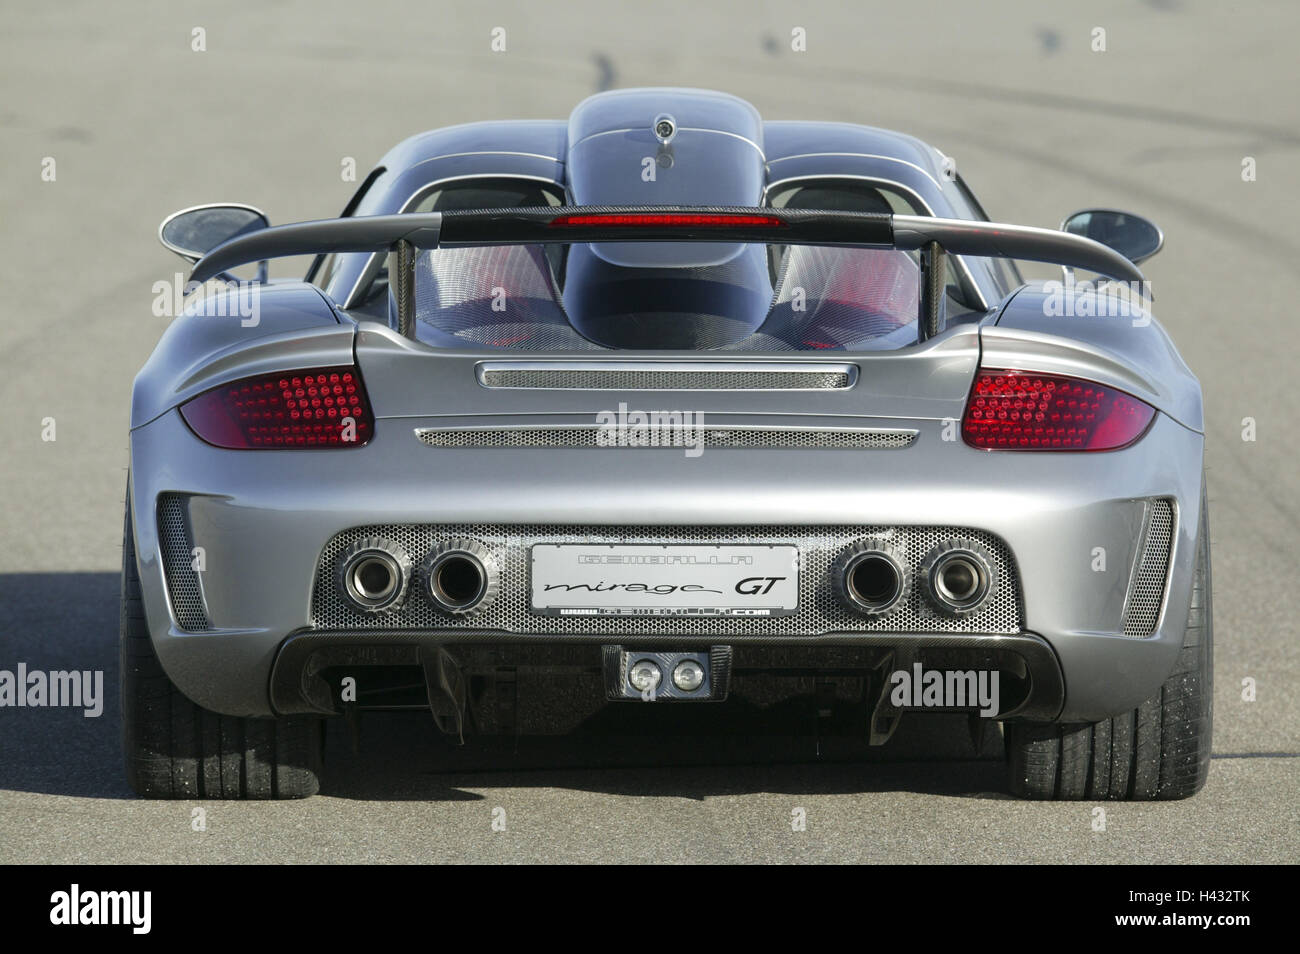 Gemballa Porsche, 'Mirage GT', silver, rear view Stock Photo